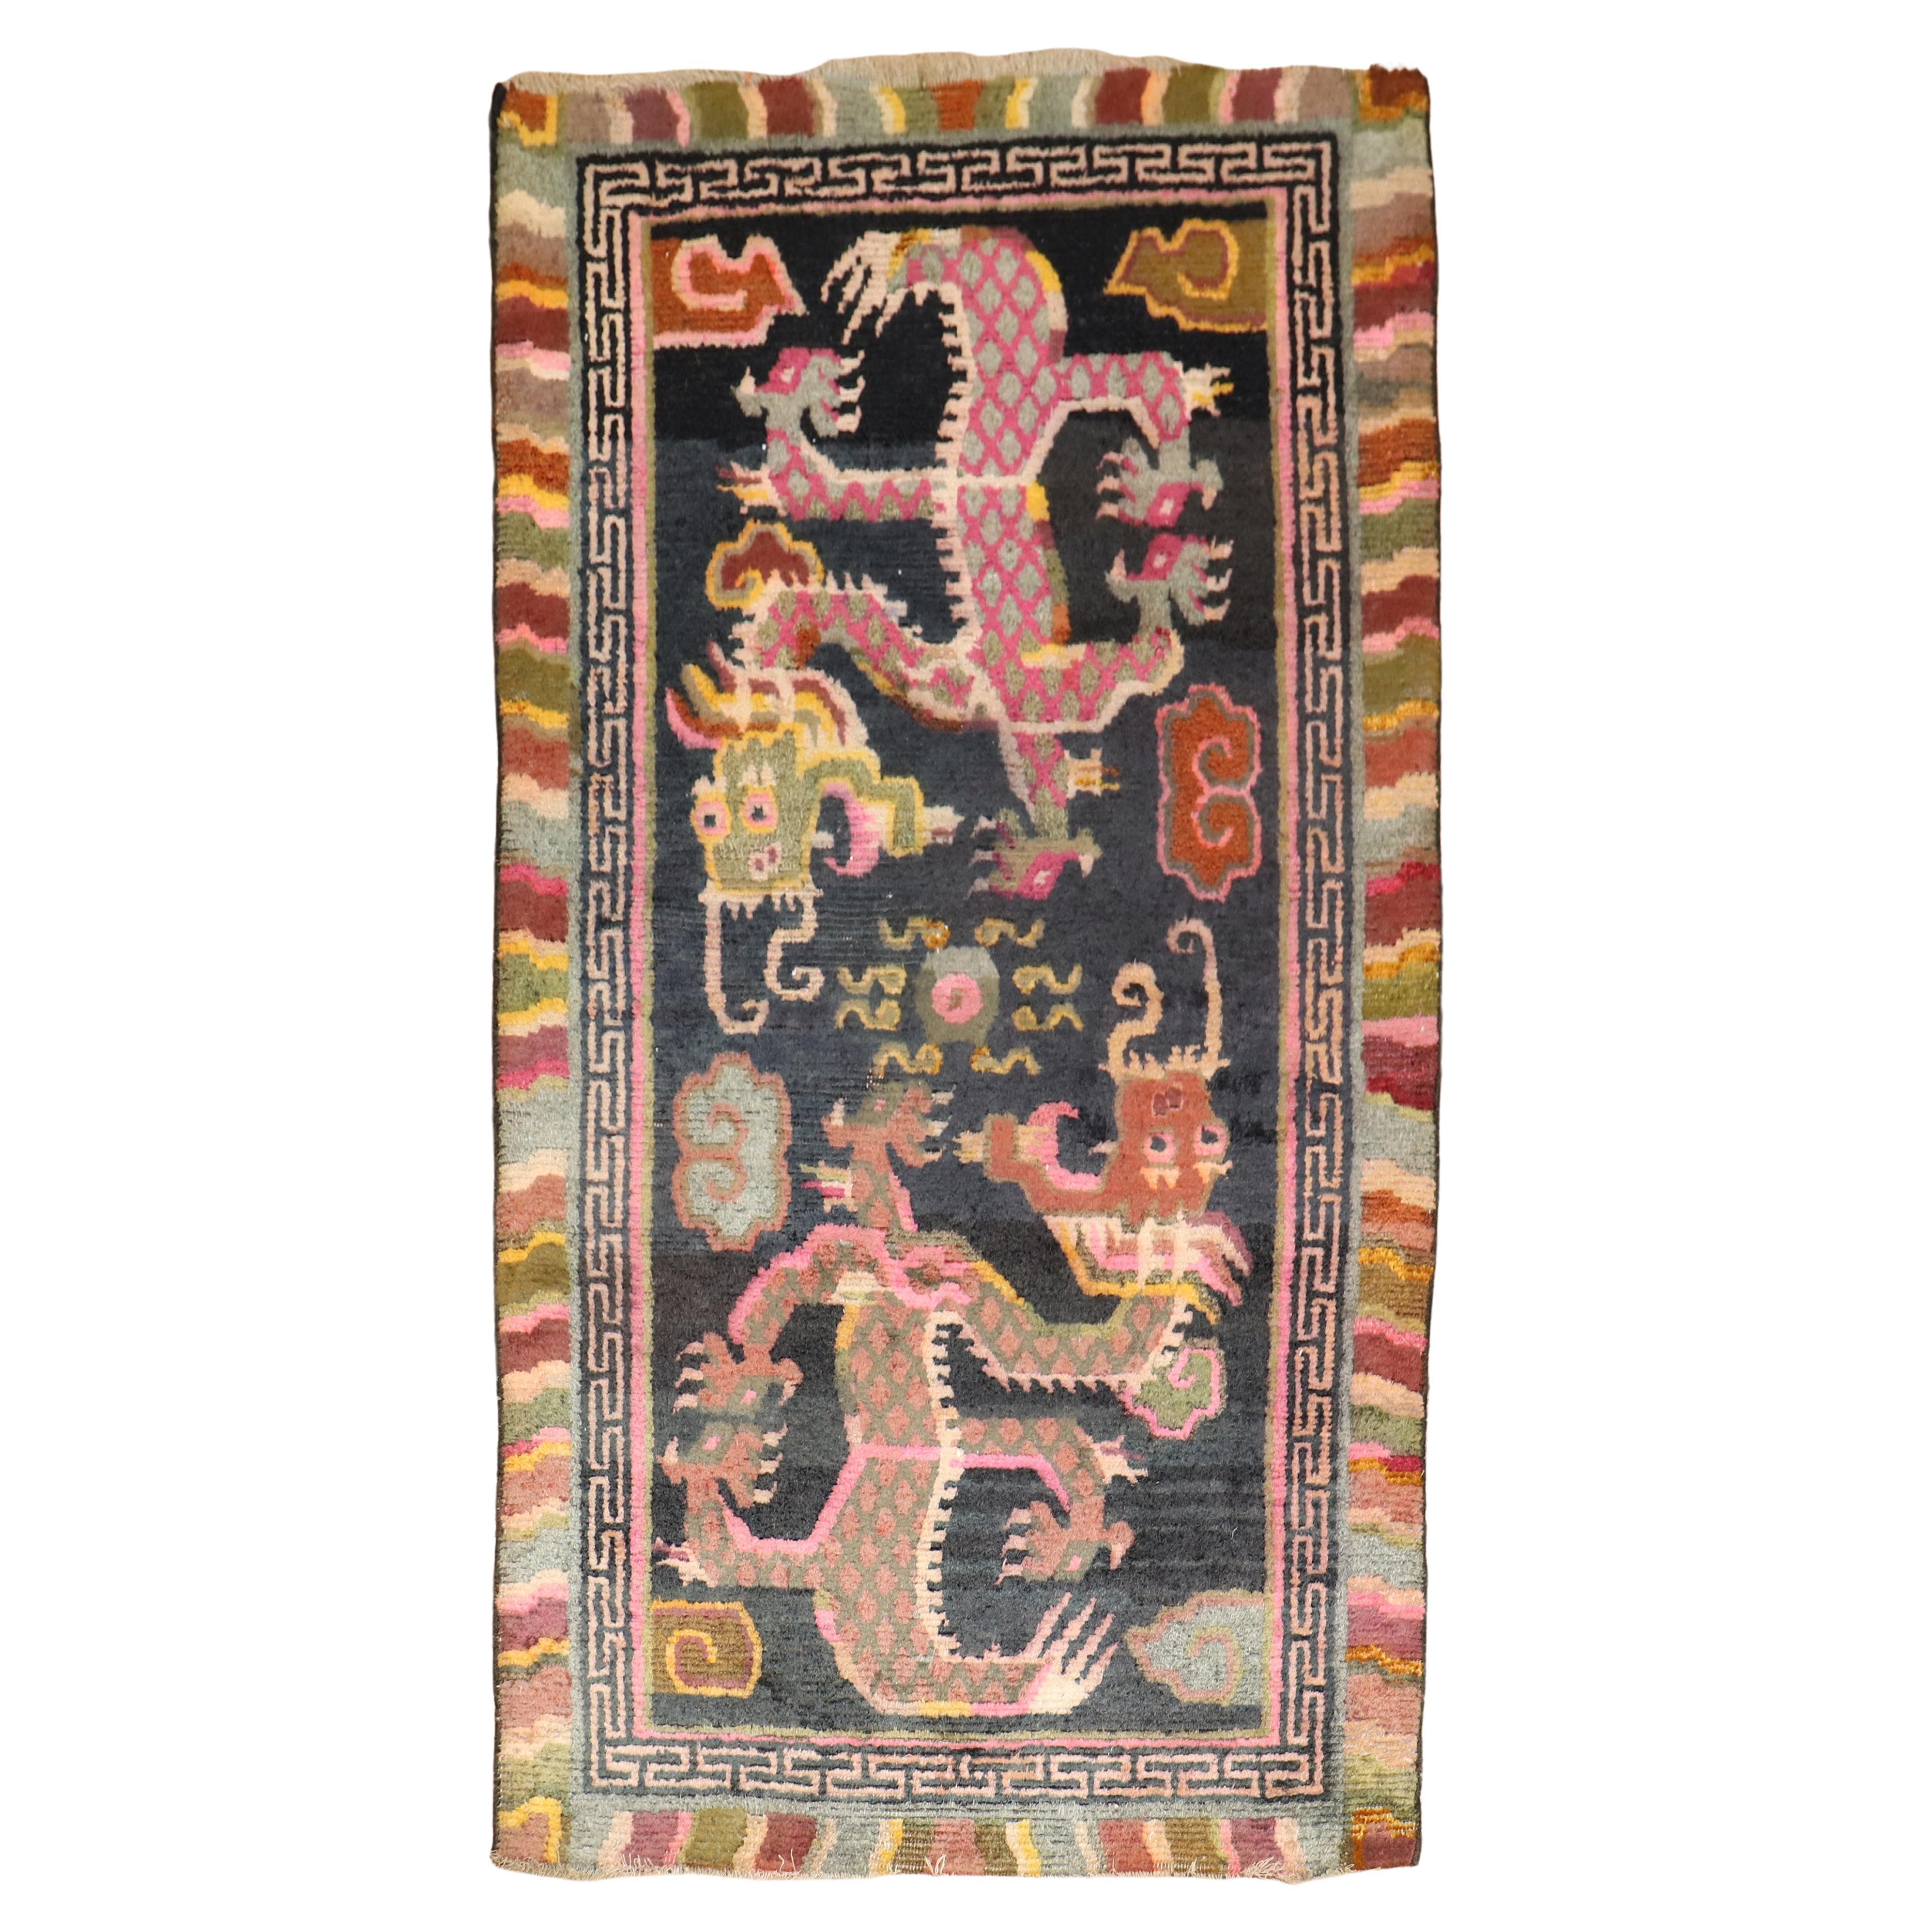 https://a.1stdibscdn.com/colorful-dragon-tibetan-early-20th-century-rug-for-sale/f_9087/f_322136321673626101283/f_32213632_1673626103860_bg_processed.jpg